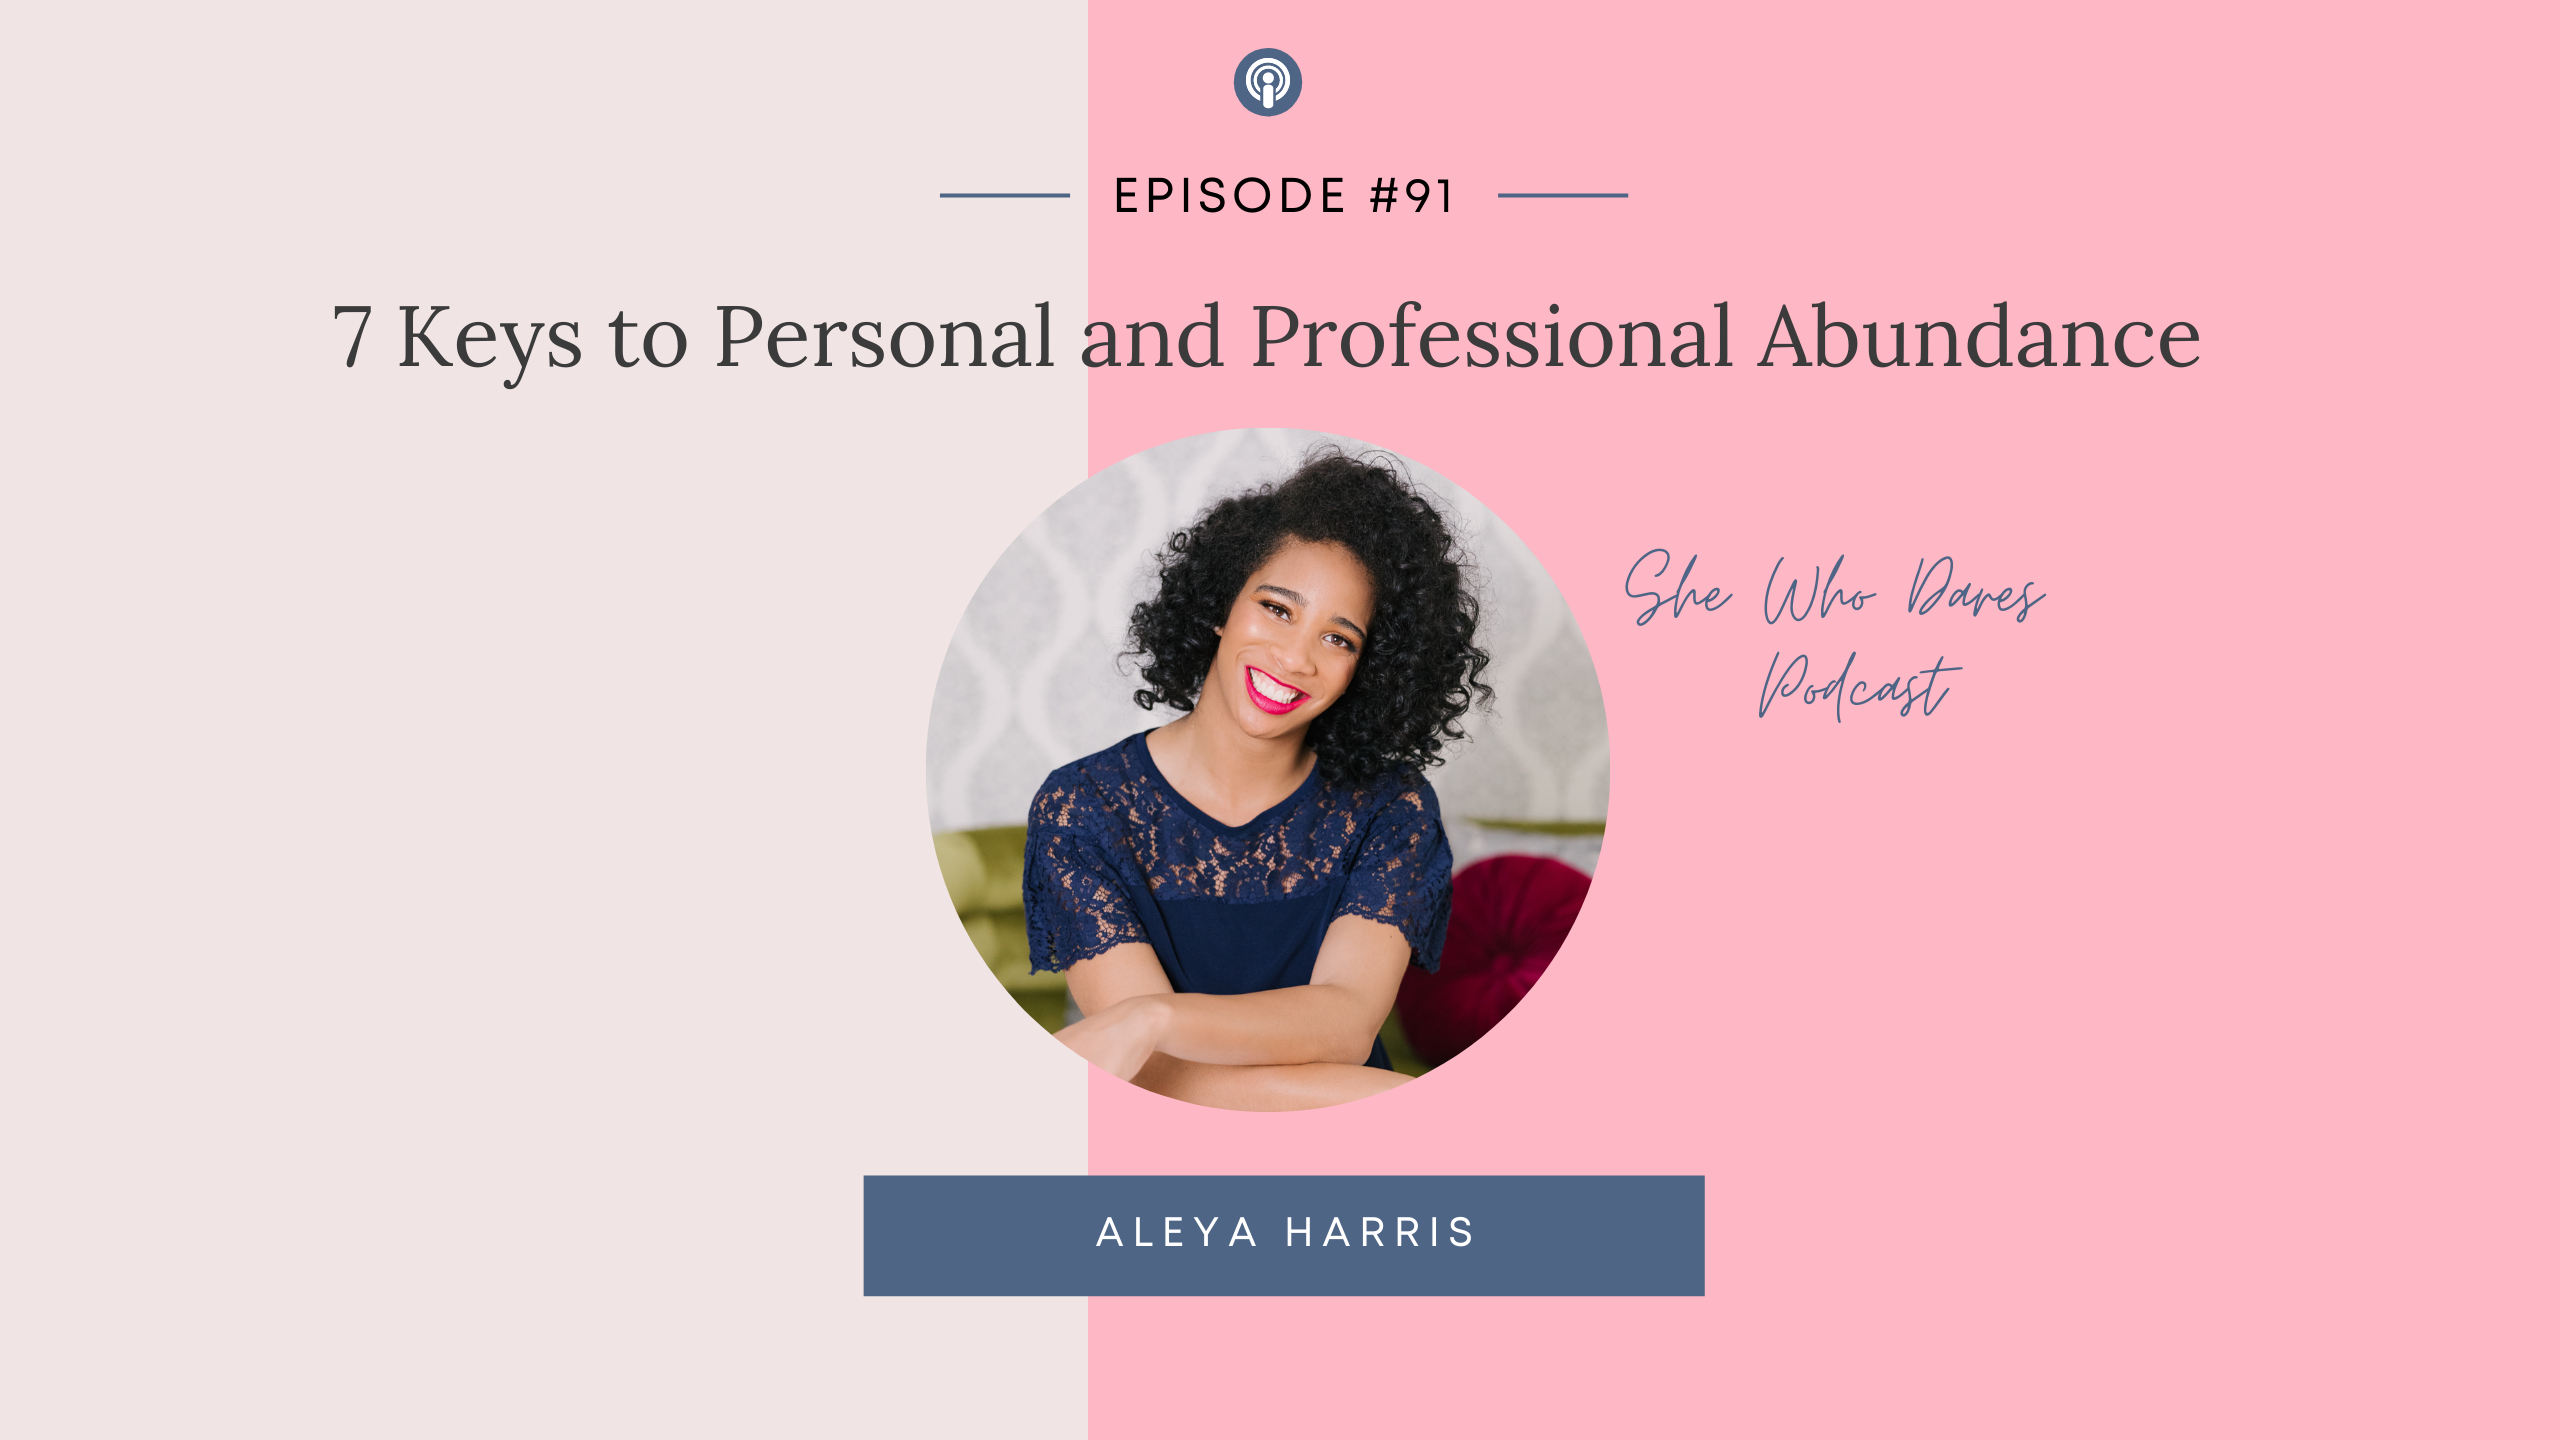 7 Keys to Personal and Professional Abundance with Aleya Harris